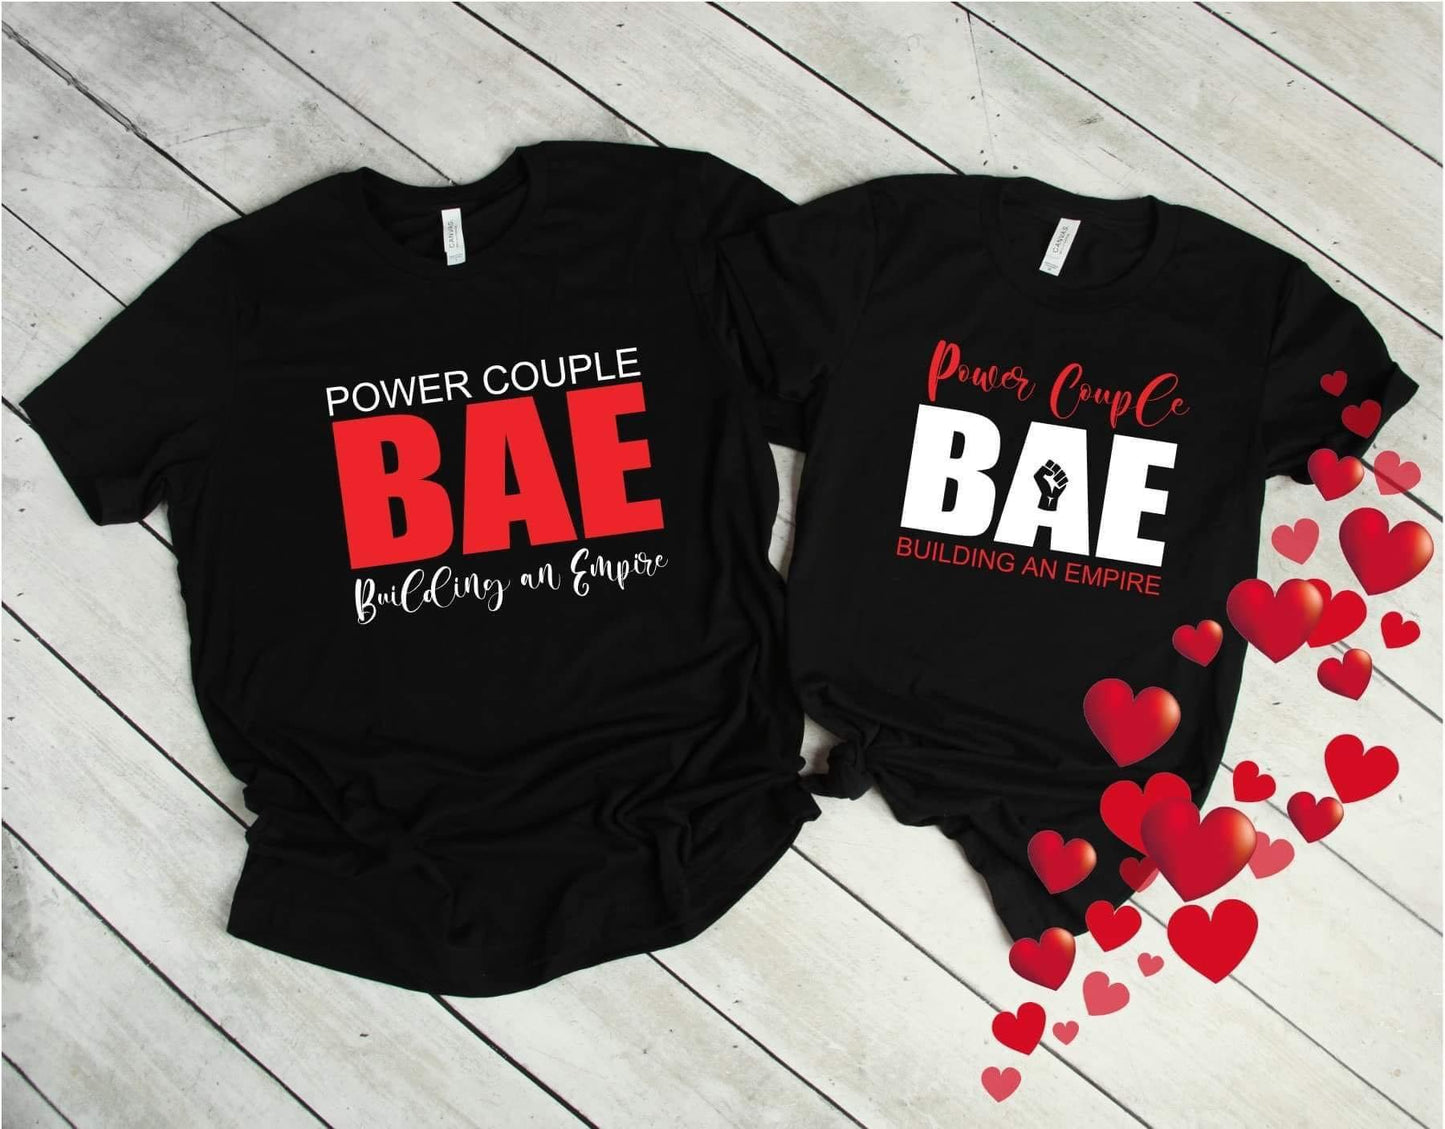 Power Couple (BAE shirt set)